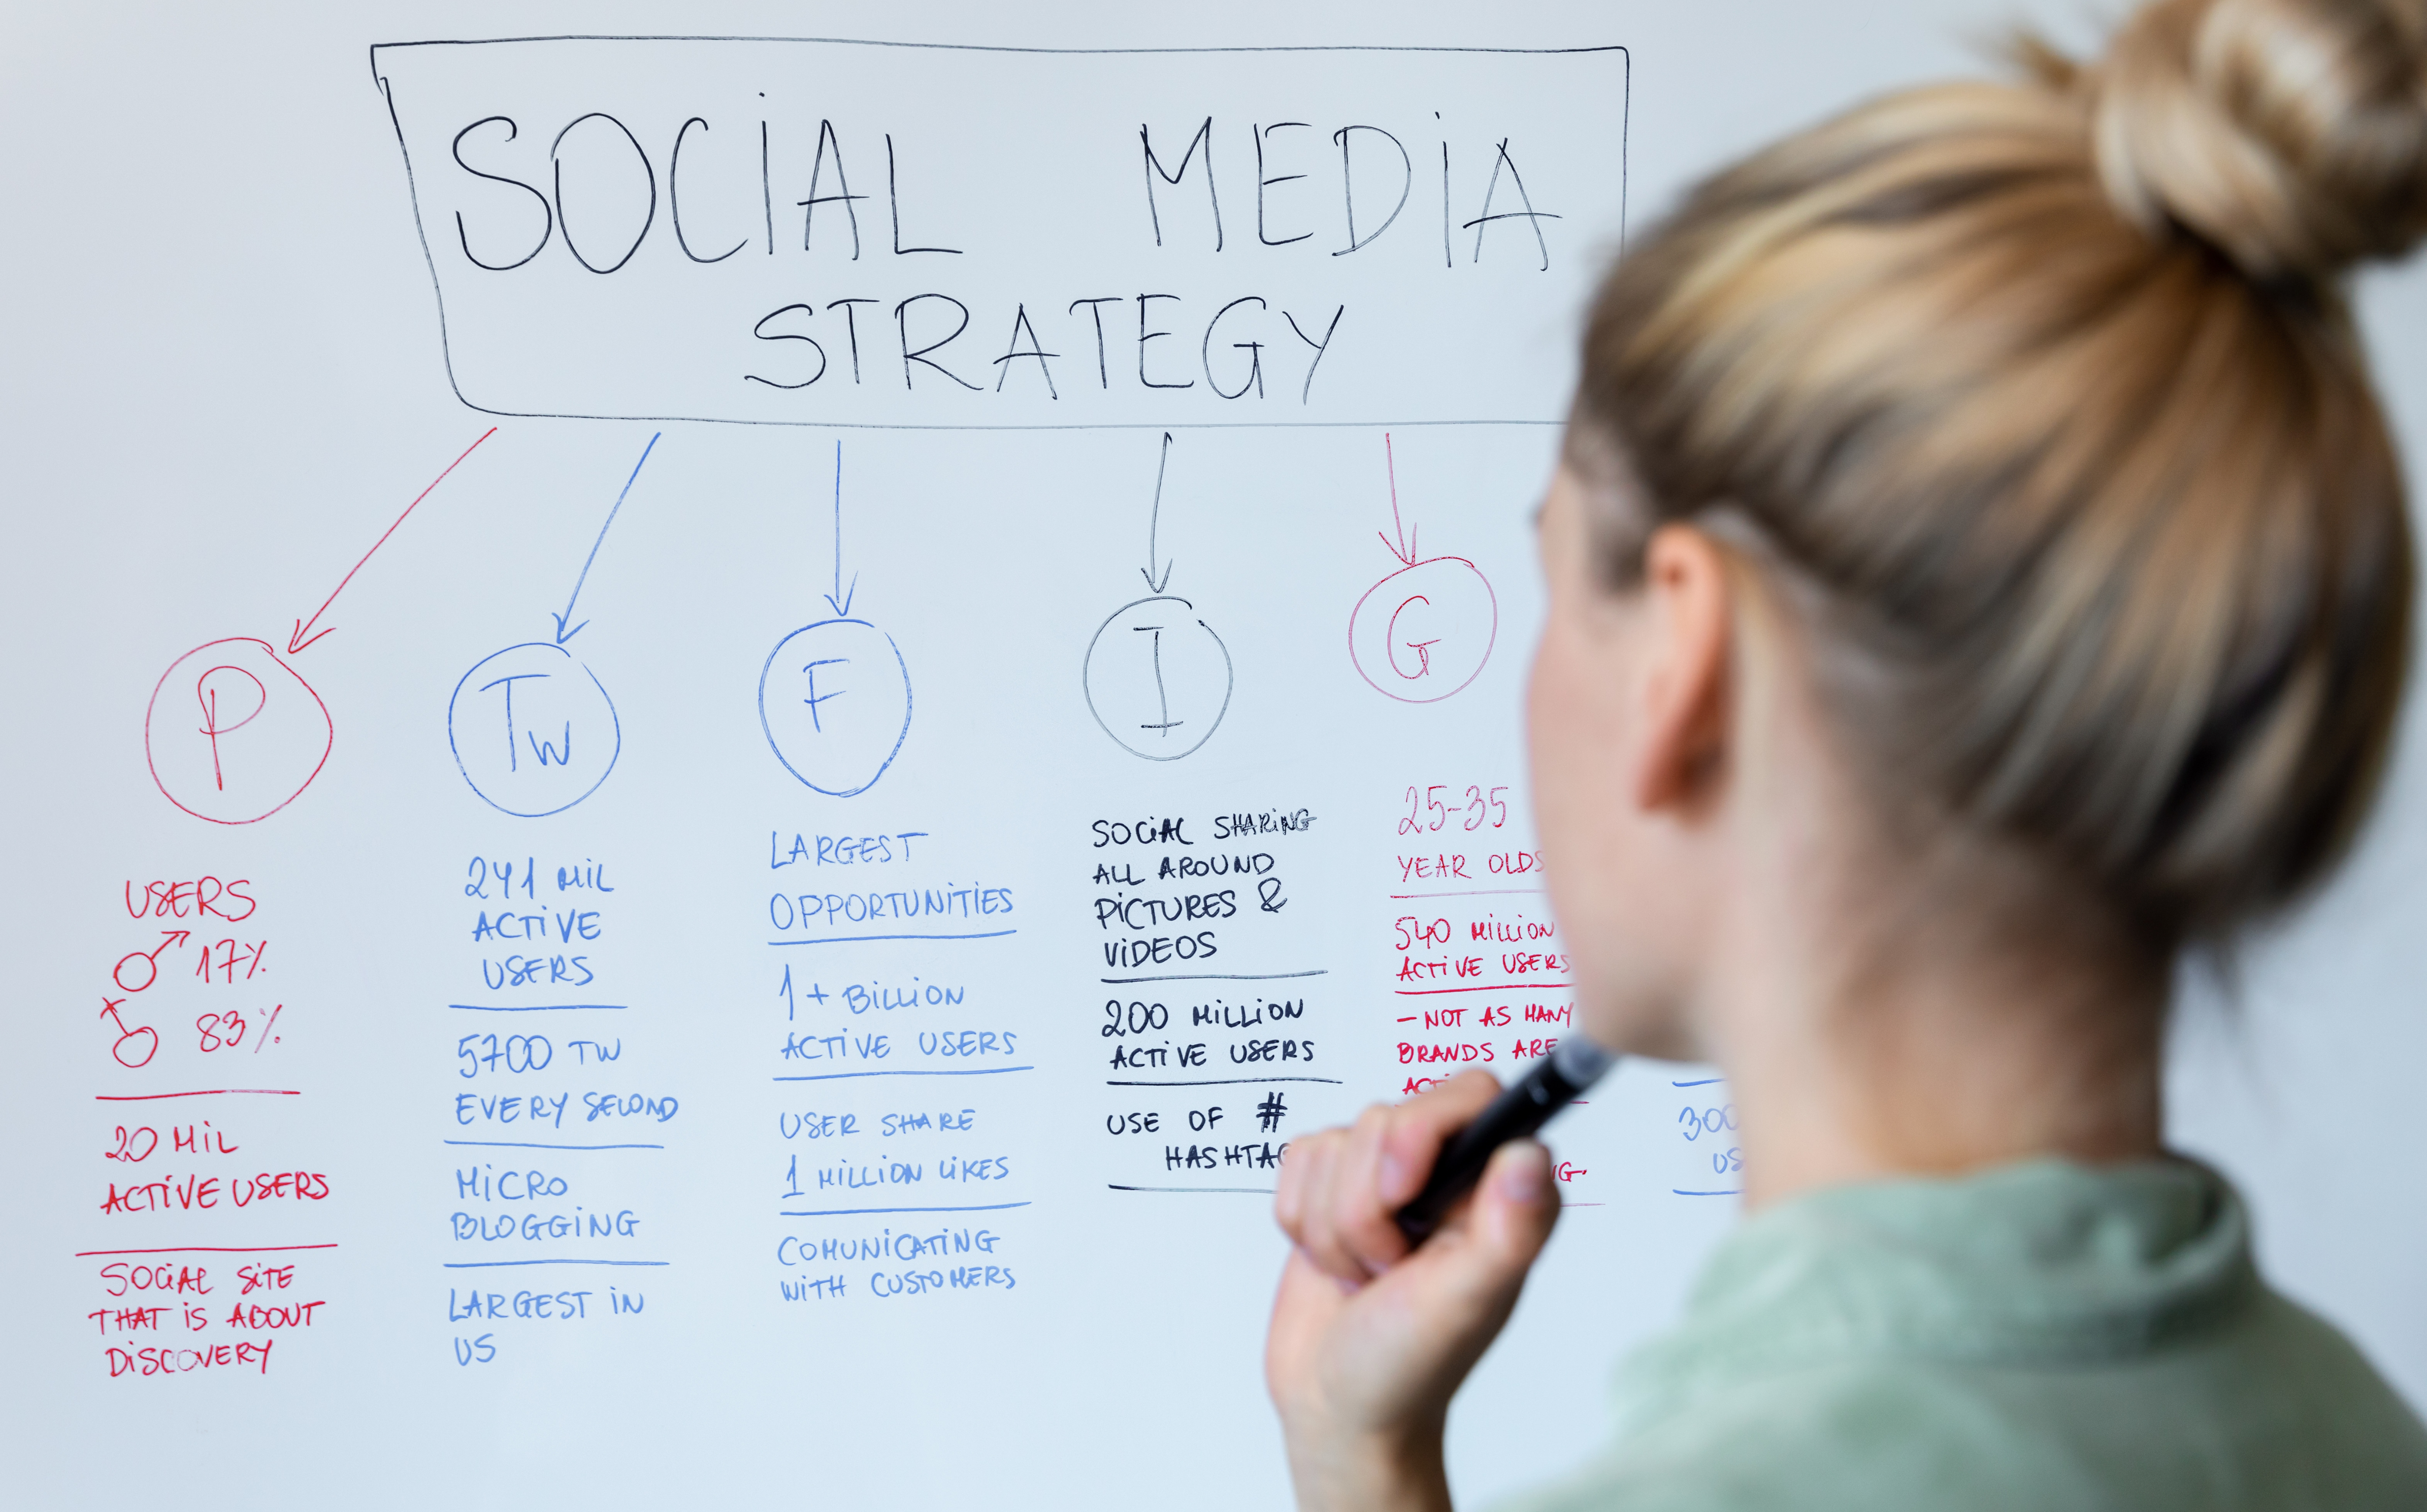 How to market on Social media